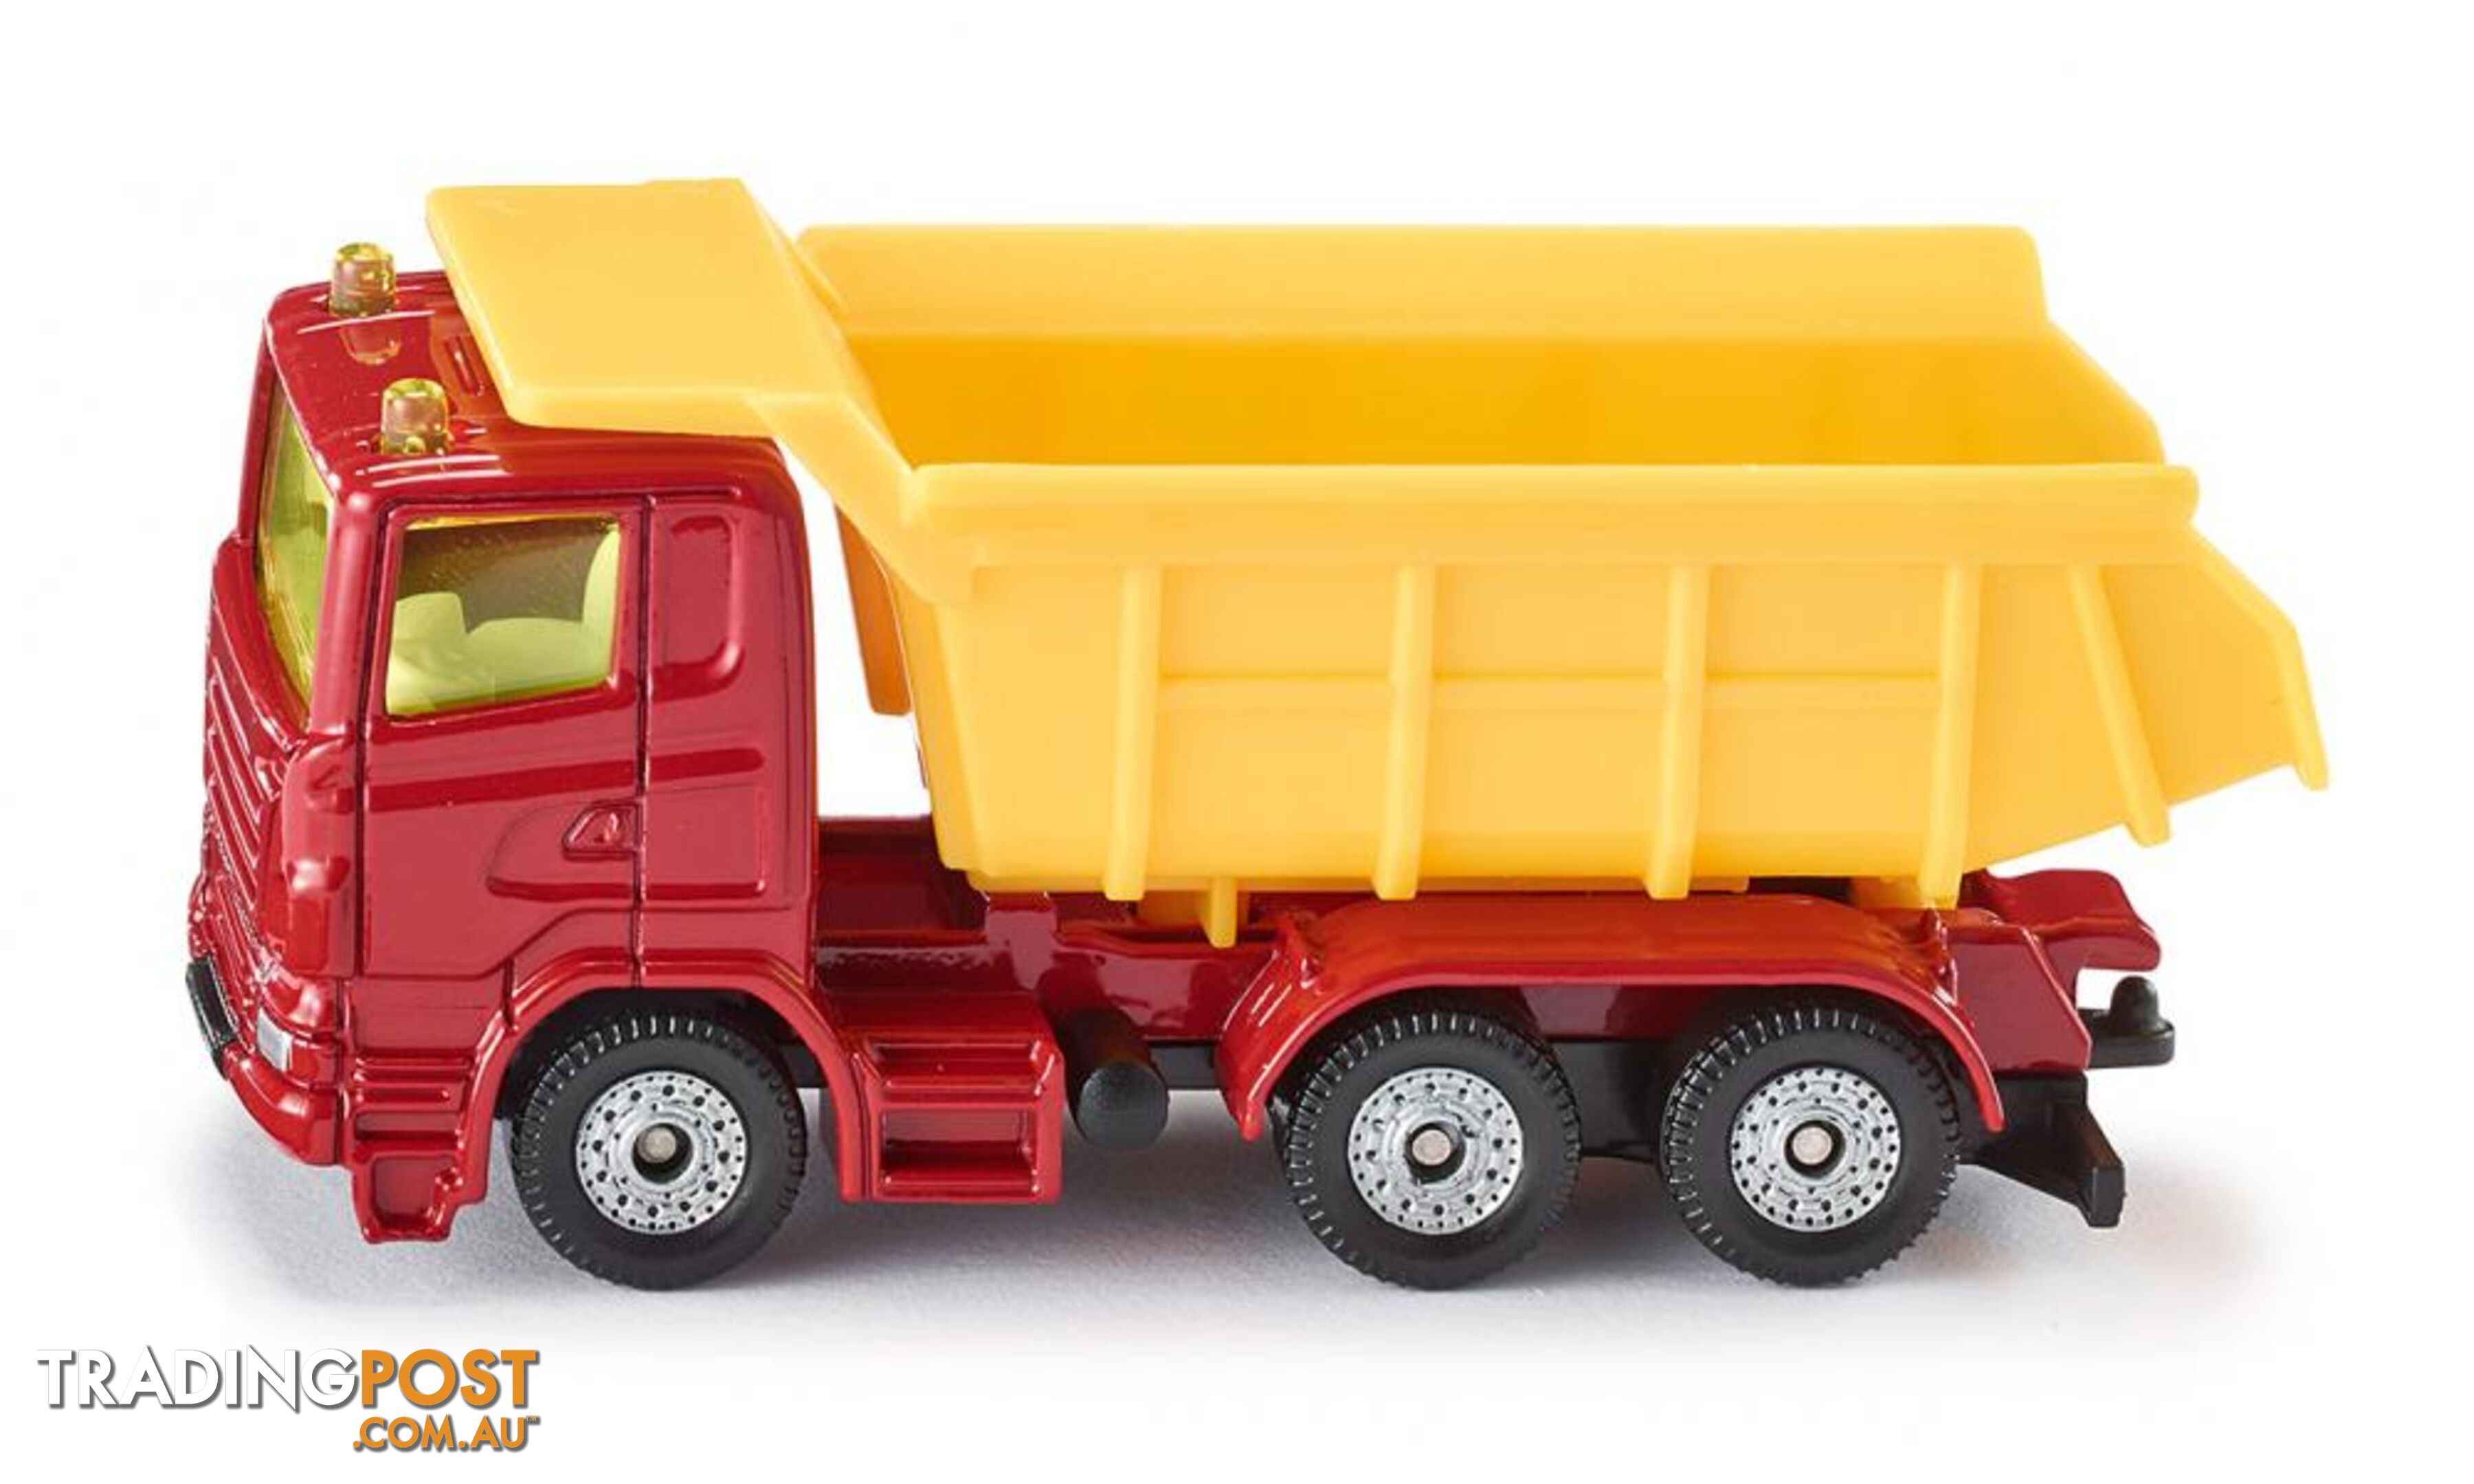 Siku - Truck With Dumper Body Transport  Load-up  Si1075 - 4006874010752